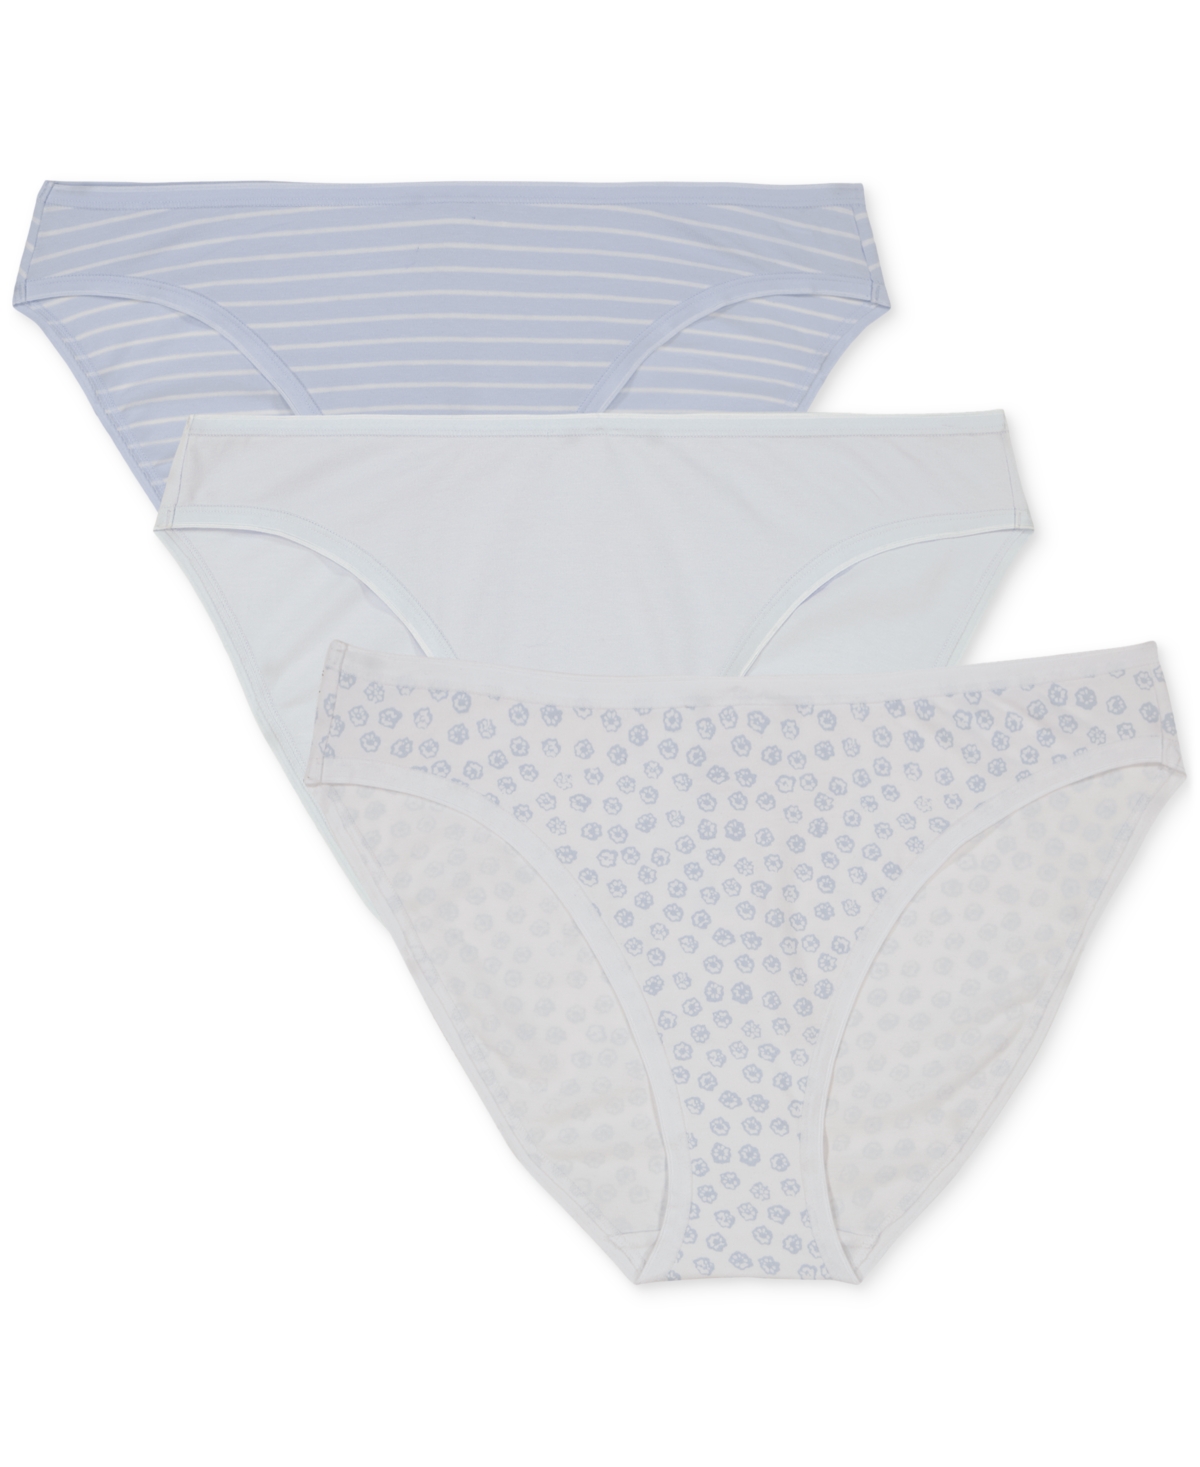 Gap Body Women's 3-pk Bikini Underwear Gpw00274 In Halogen Blue Stripe,optic White,optic Wh